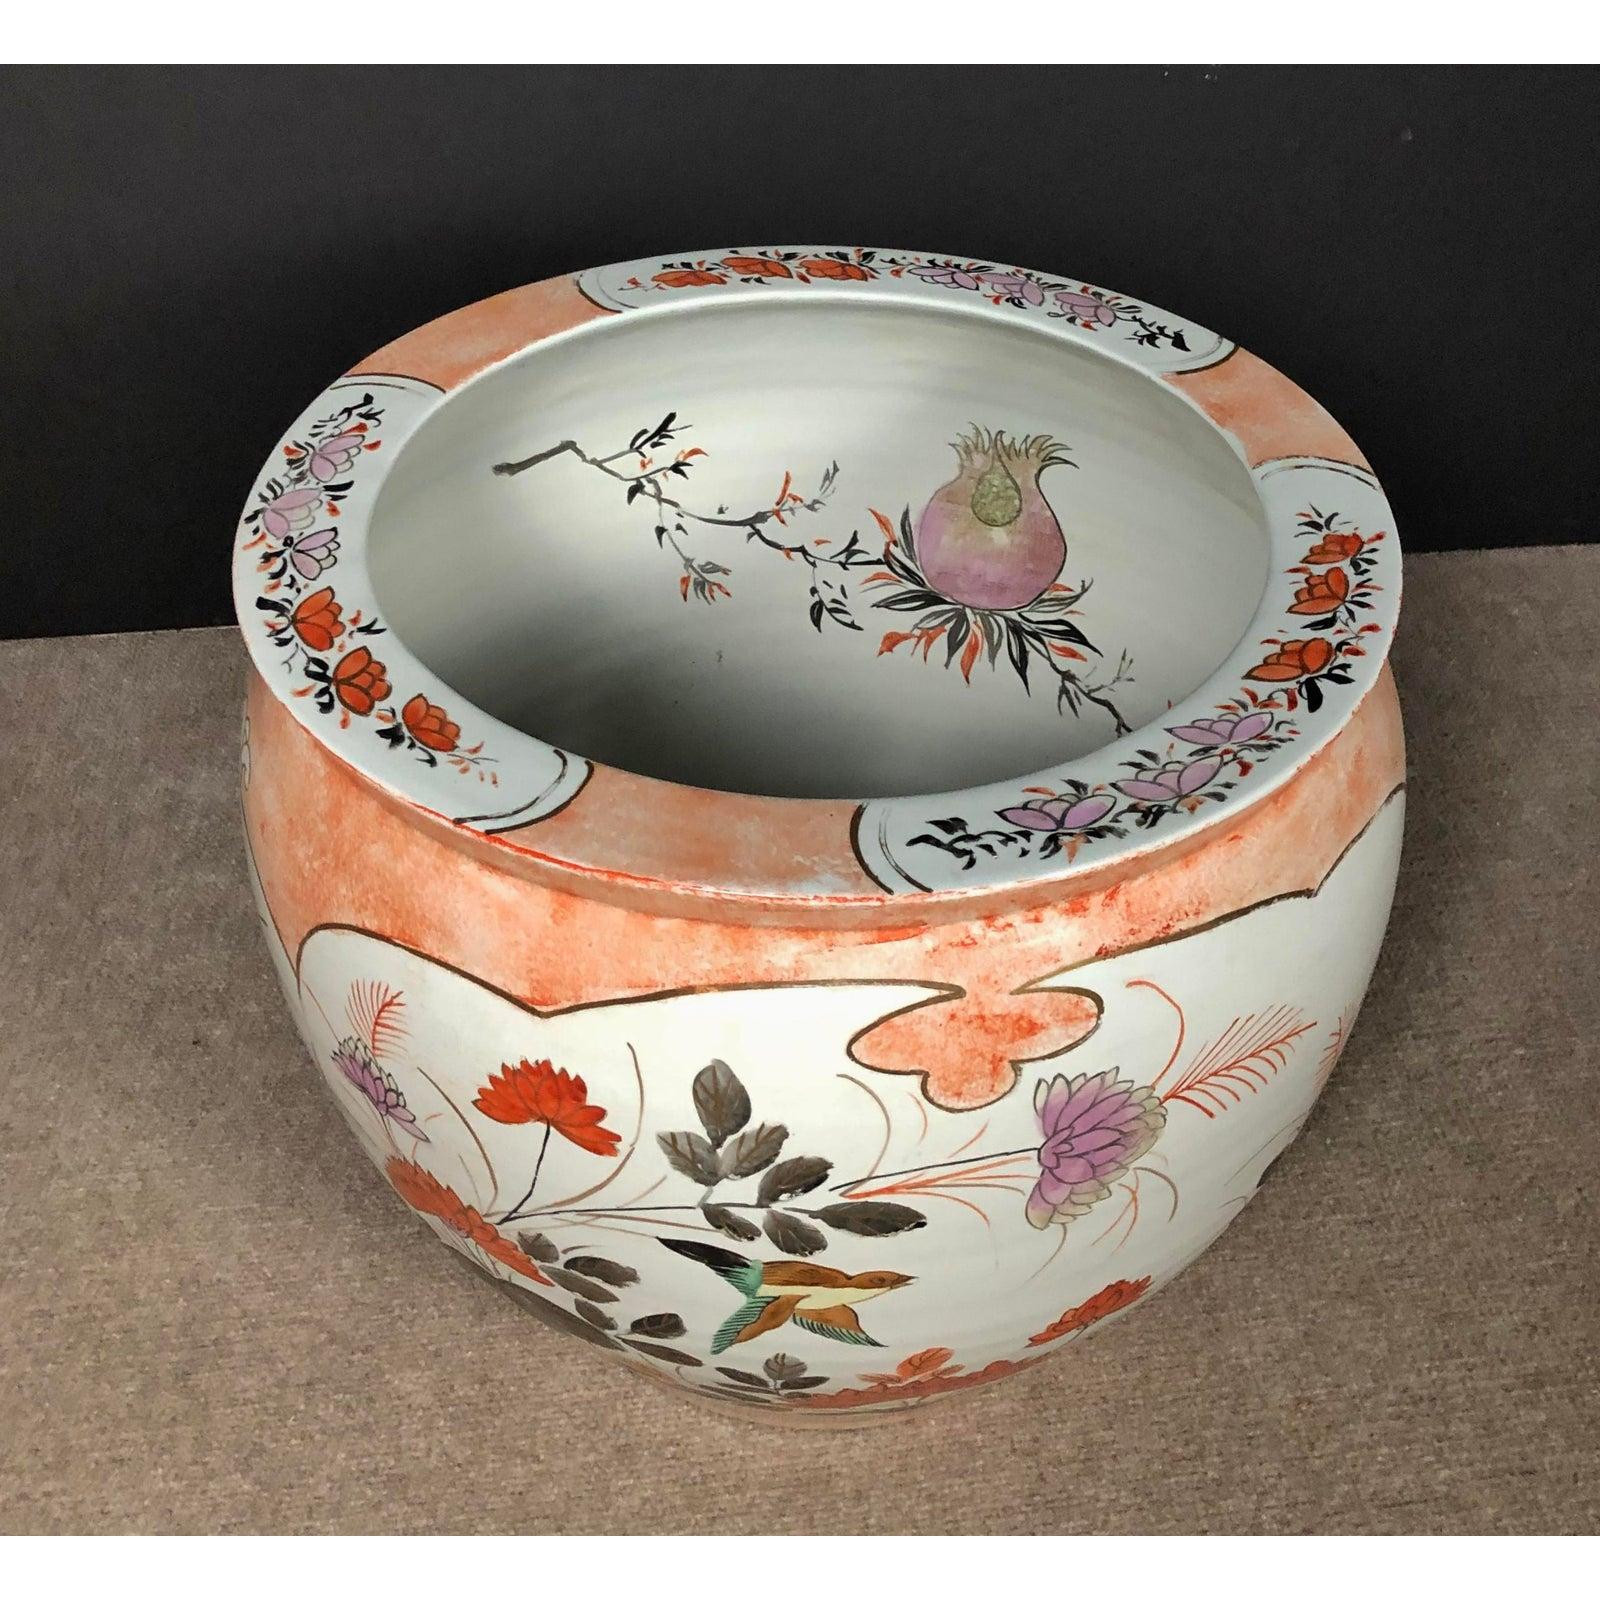 20th Century Vintage Orange and White Porcelain Japanese Fish Bowl Planter